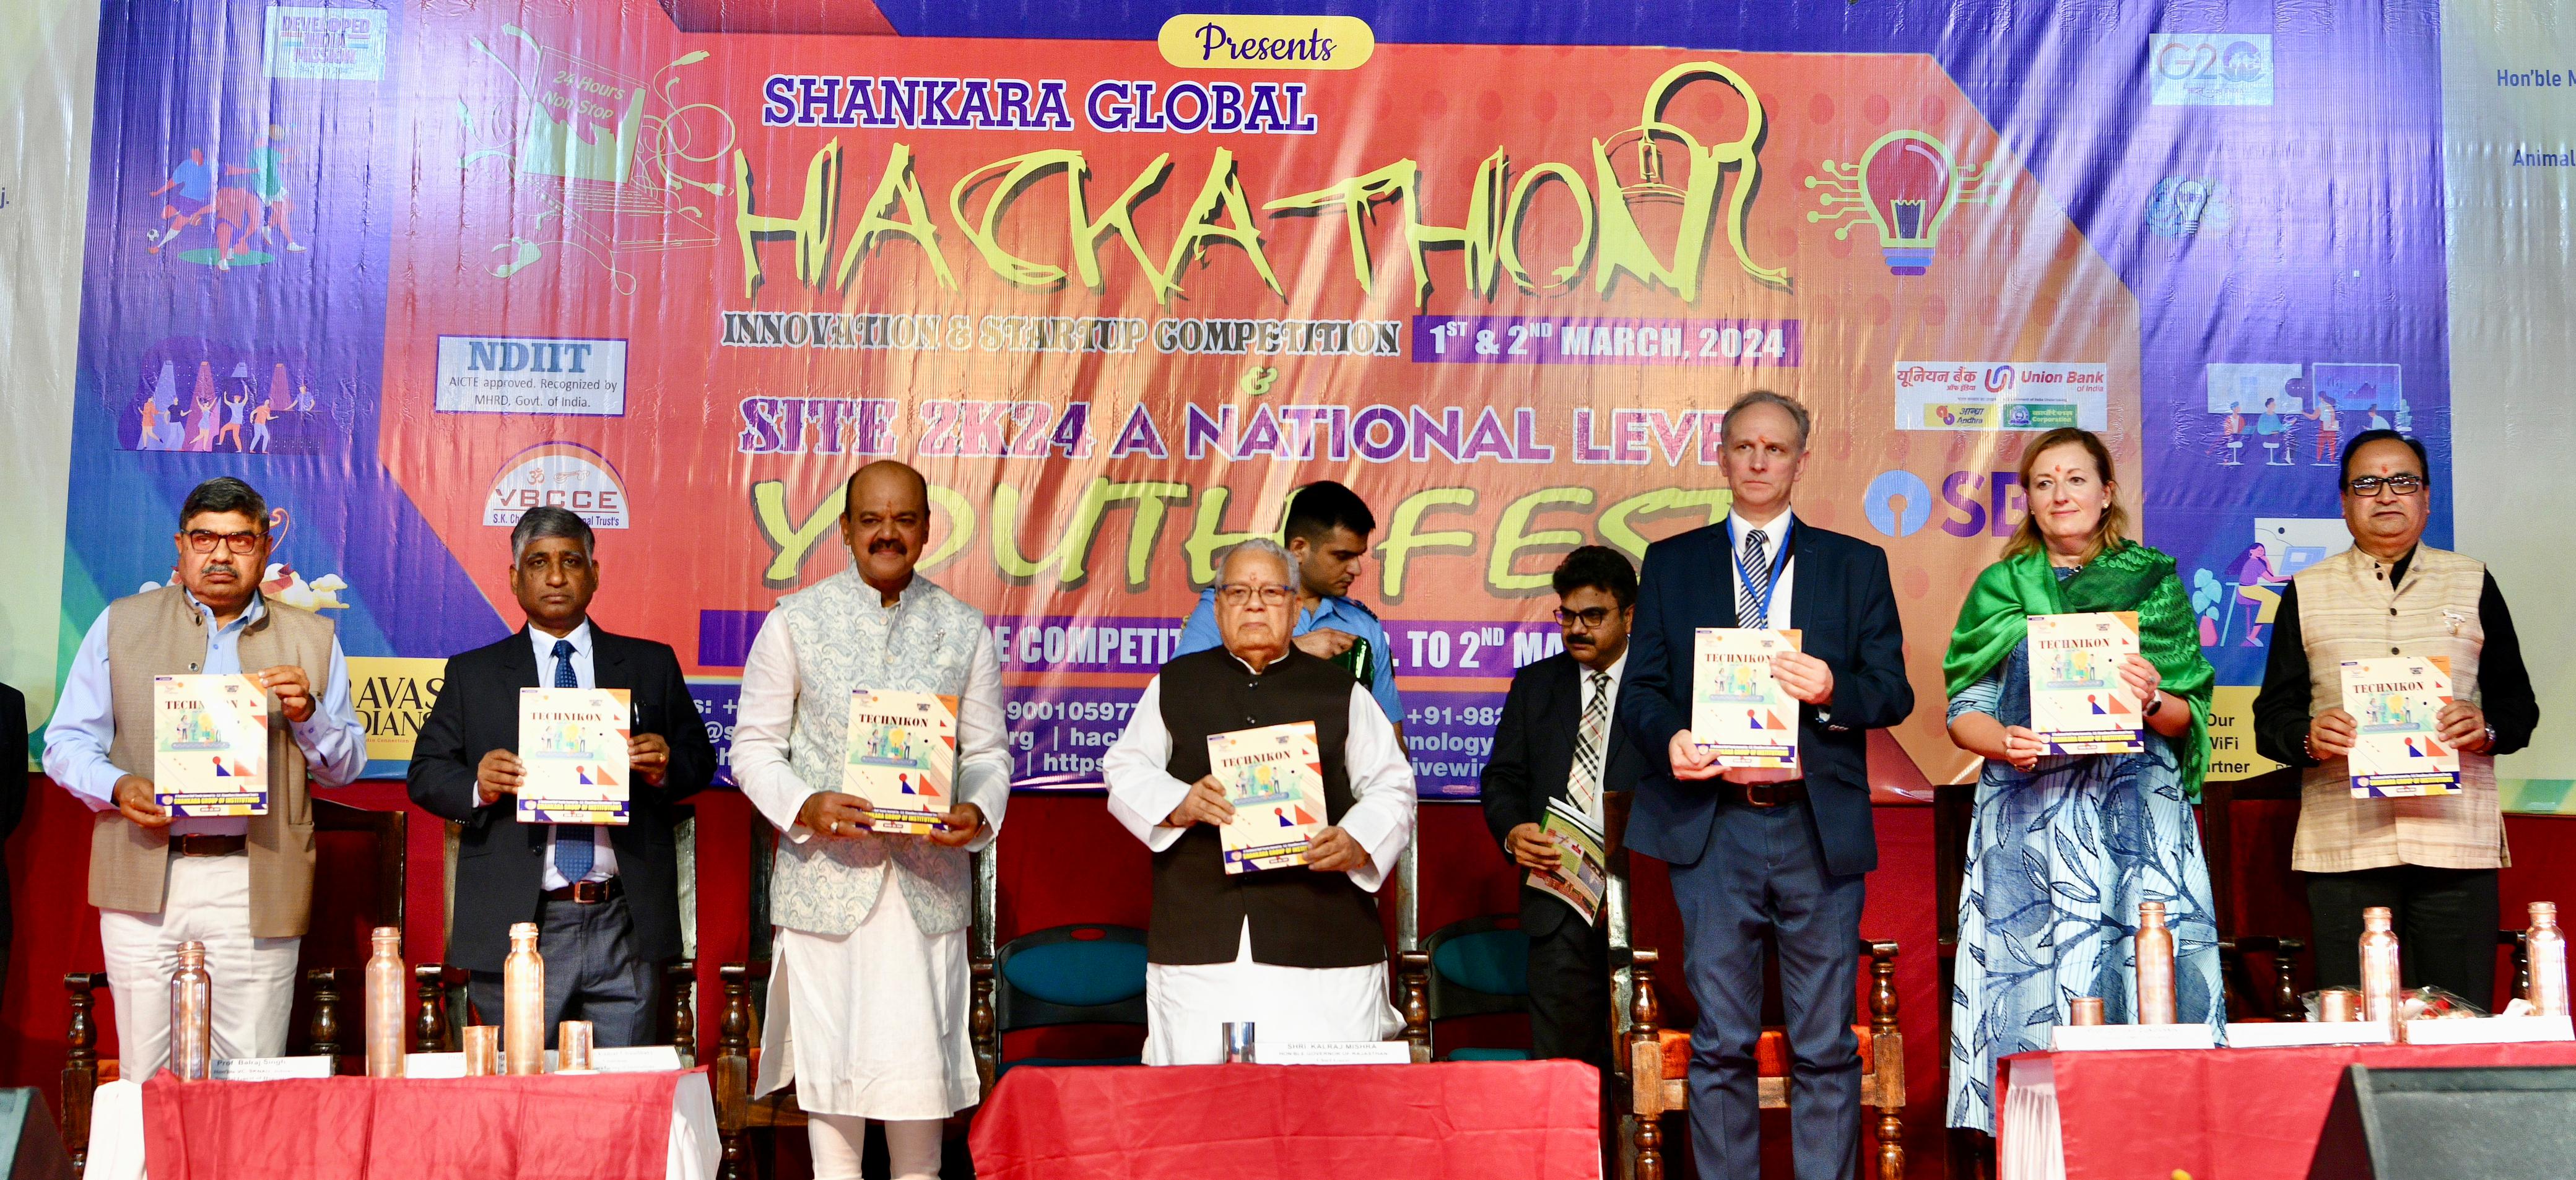 Hon'ble Governor at Shankara Global Hackathon organised by Shankara Institute of Technlogy, Jaipur